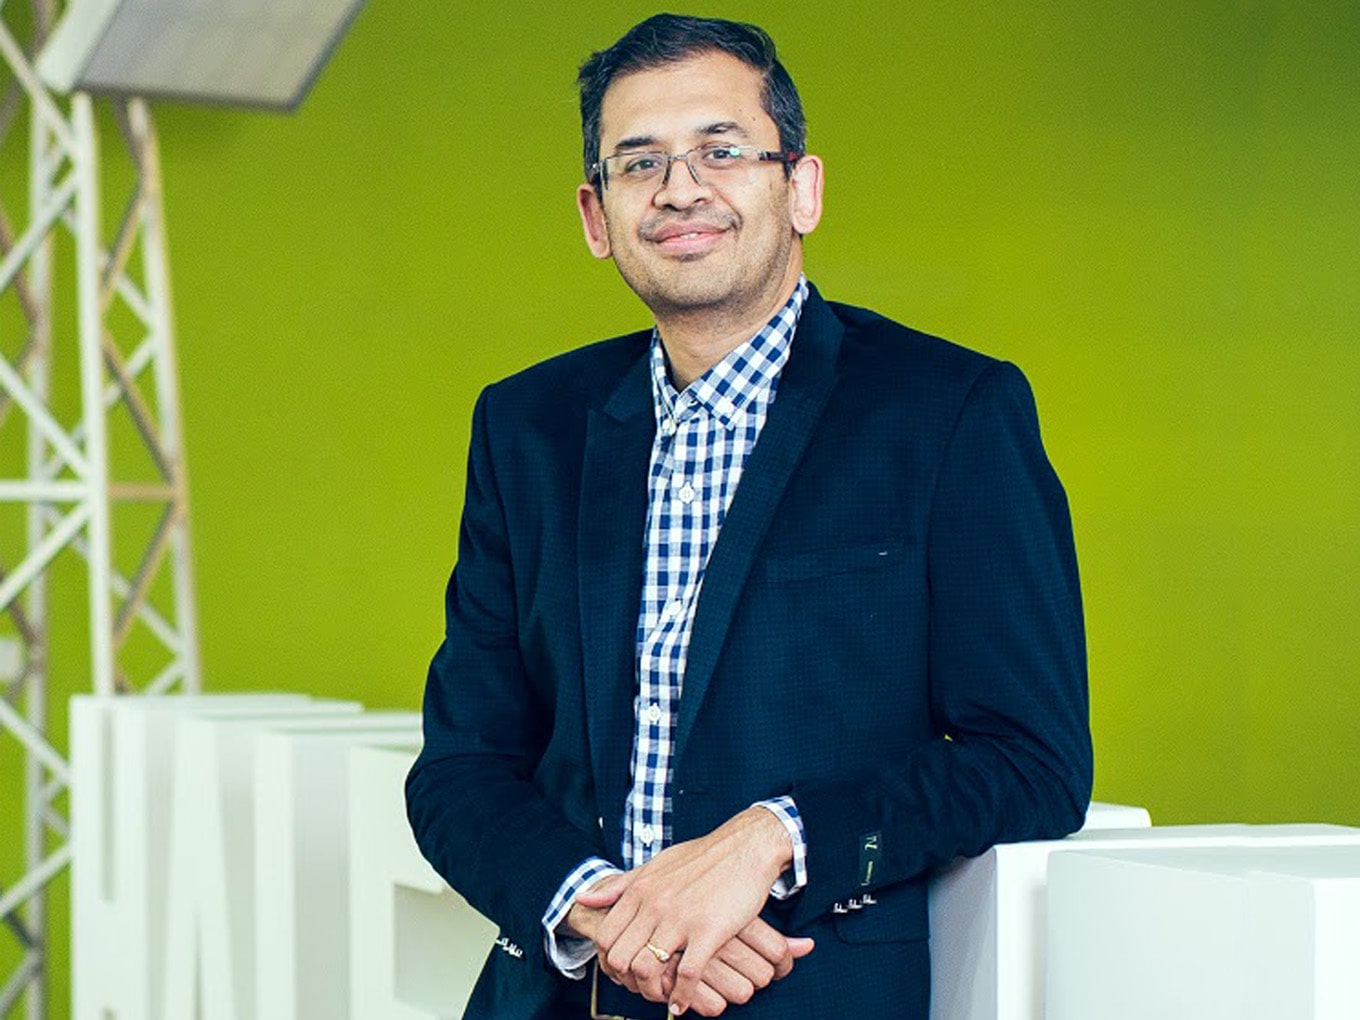 Rapid Growth And Customer Satisfaction Not At Odds: Medlife's Ananth Narayanan